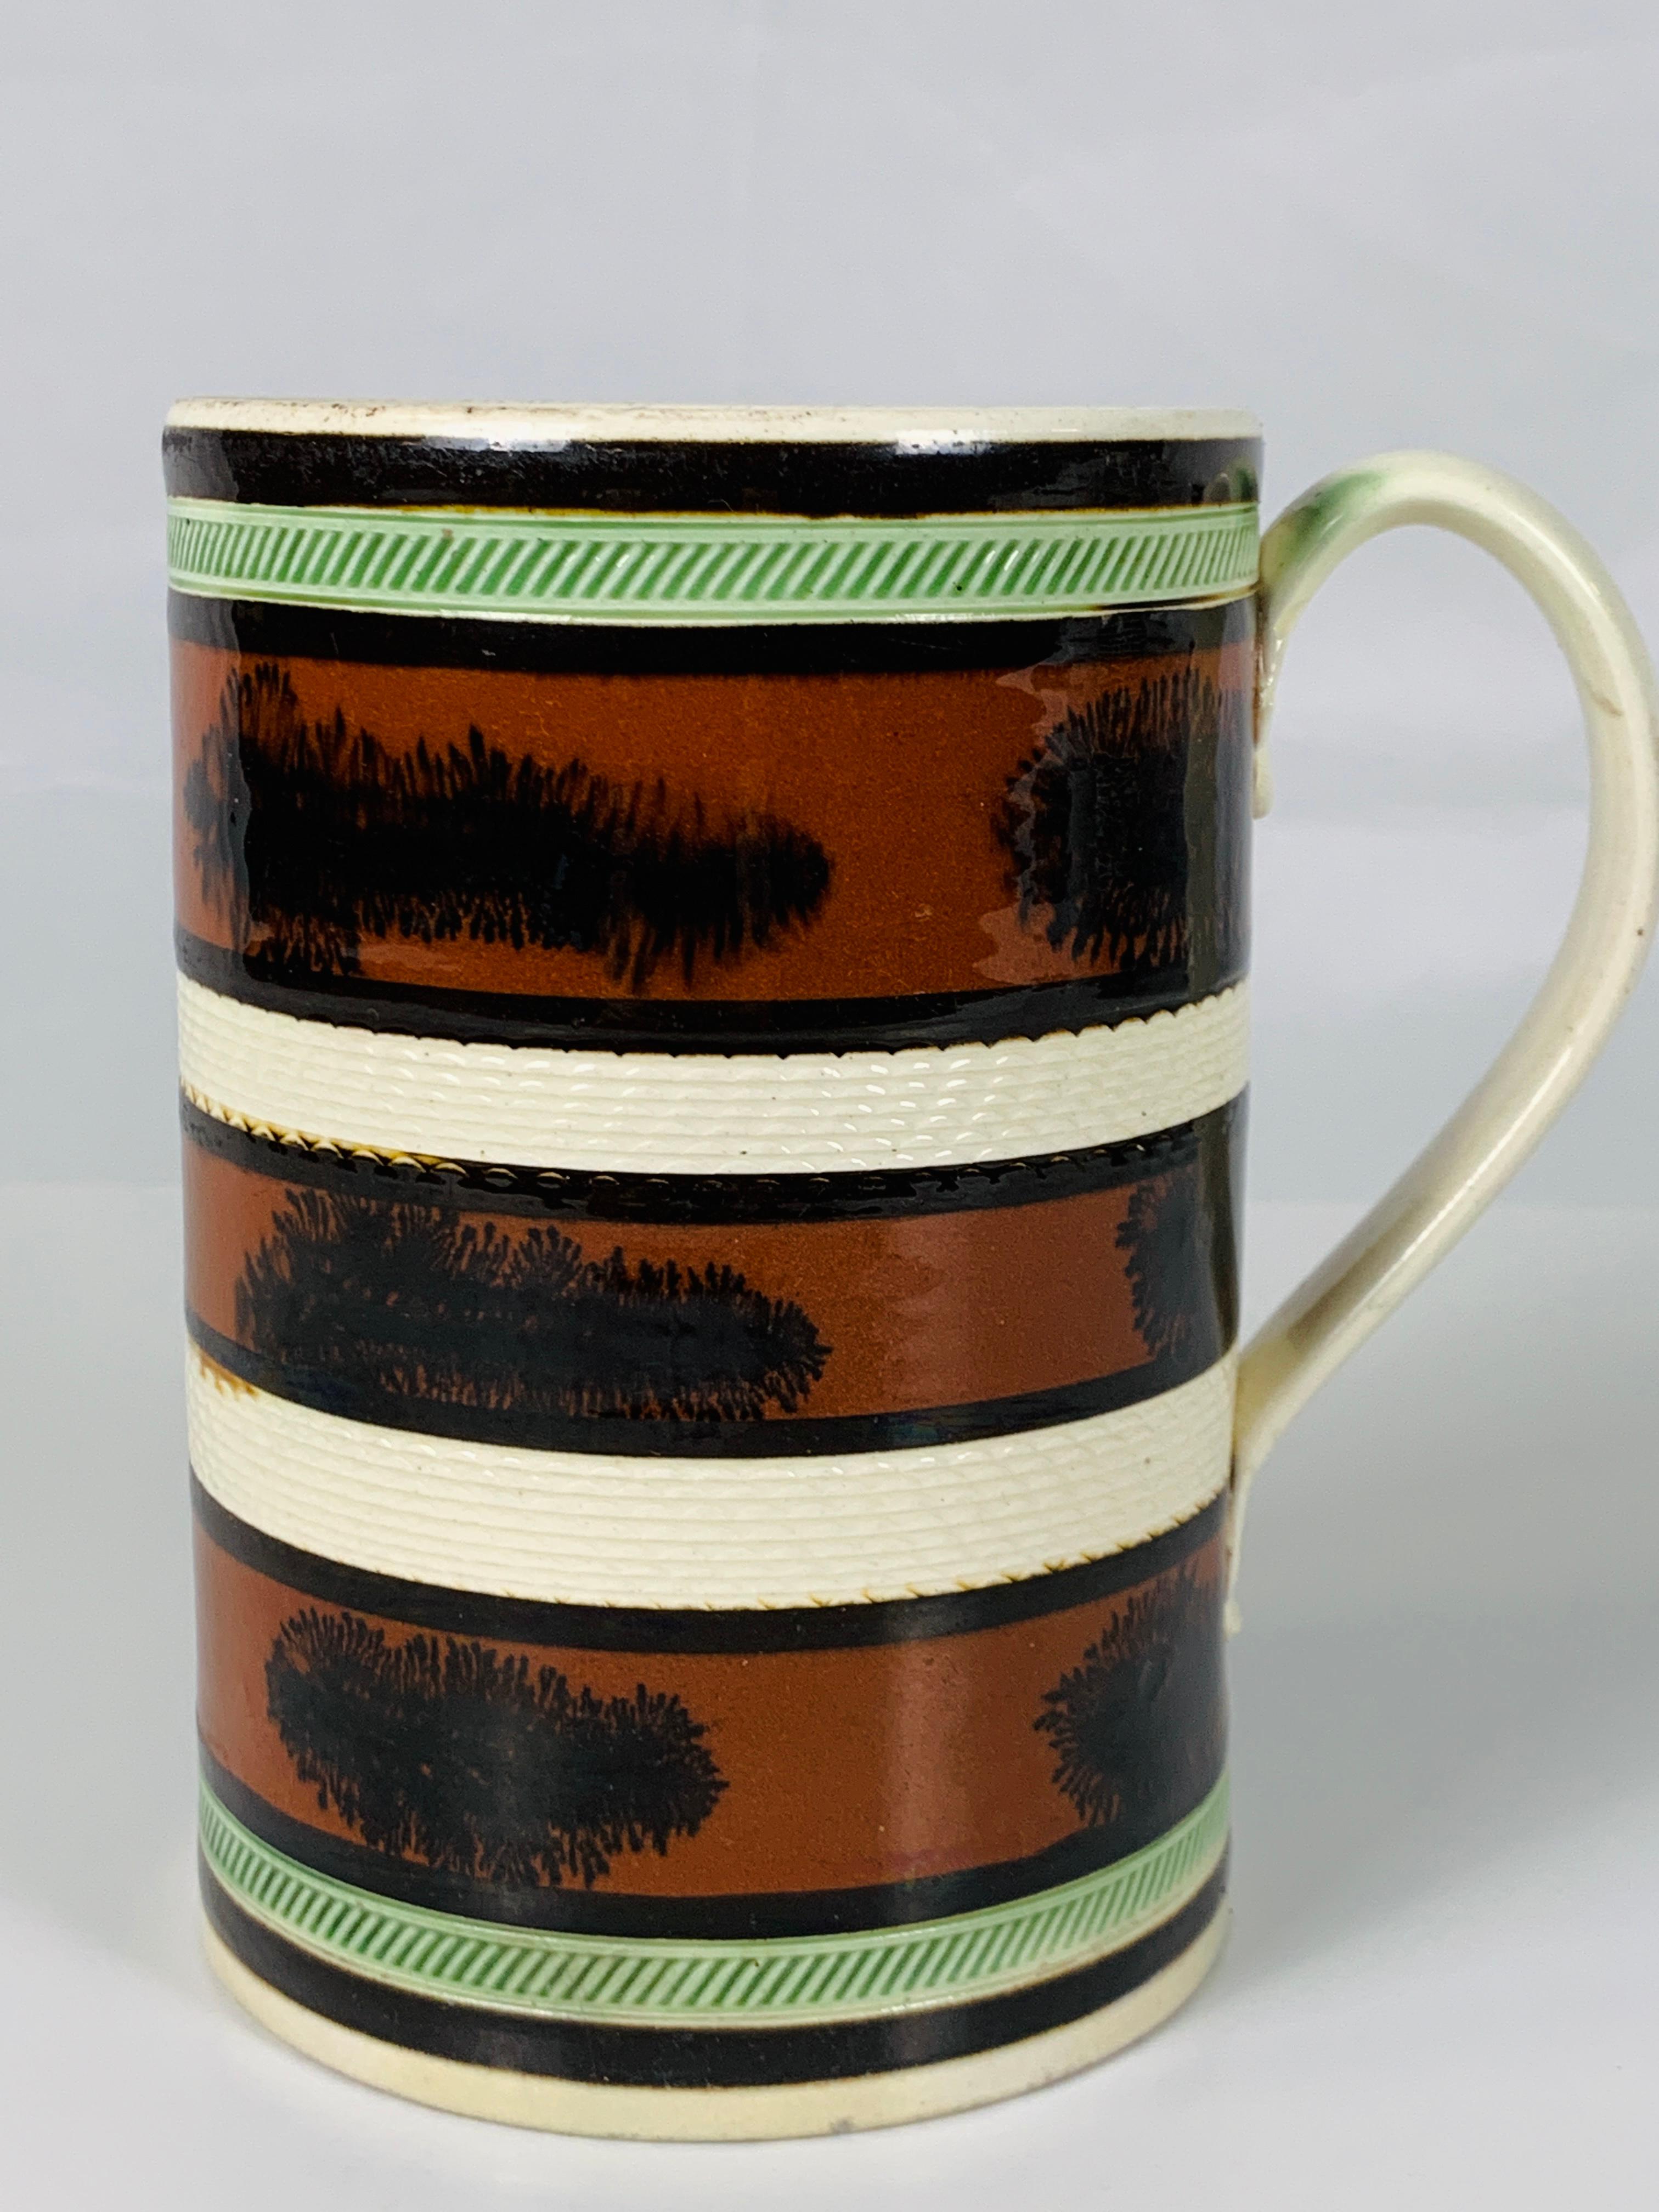 European  Mochaware Creamware Mug Made in England circa 1800 Decorated with 